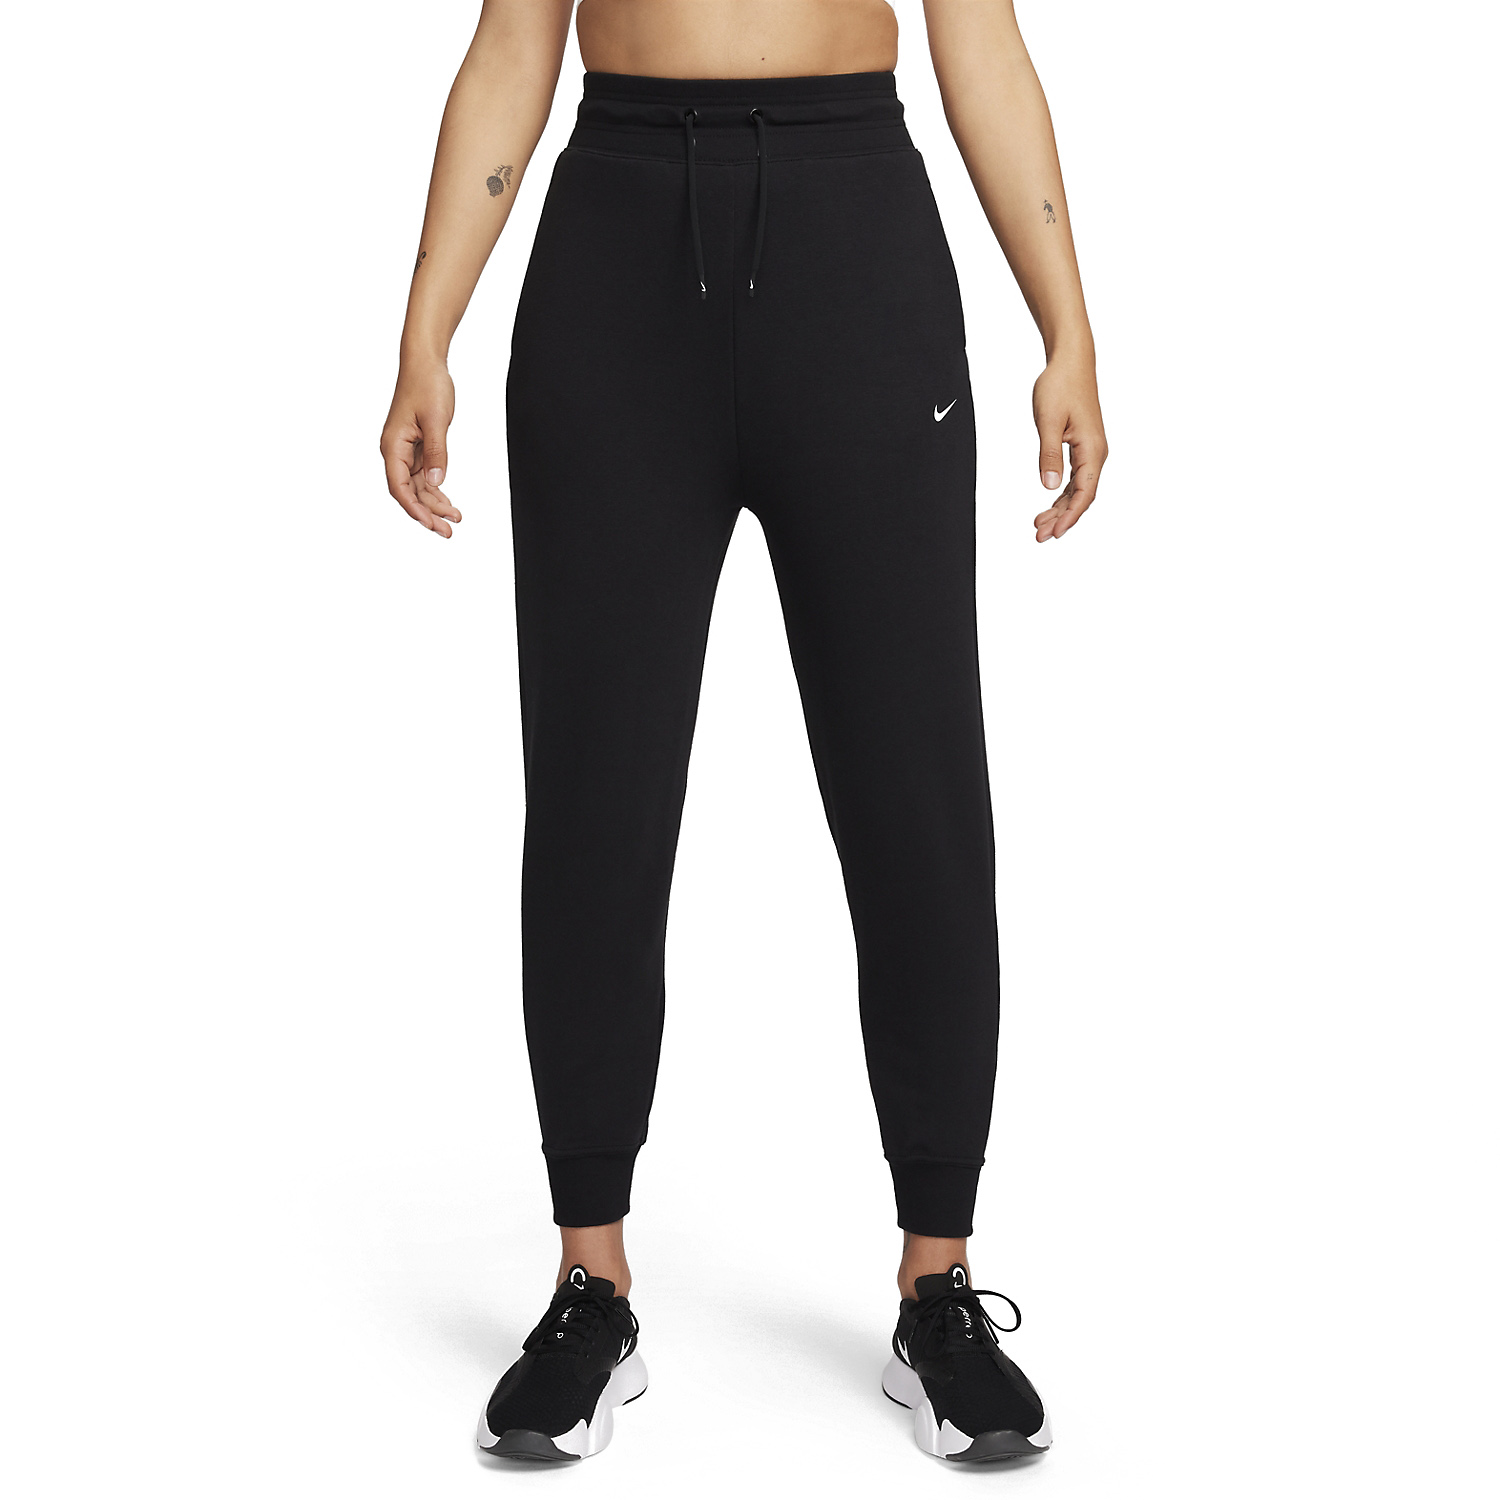 Nike Dri-FIT One Pants - Black/White